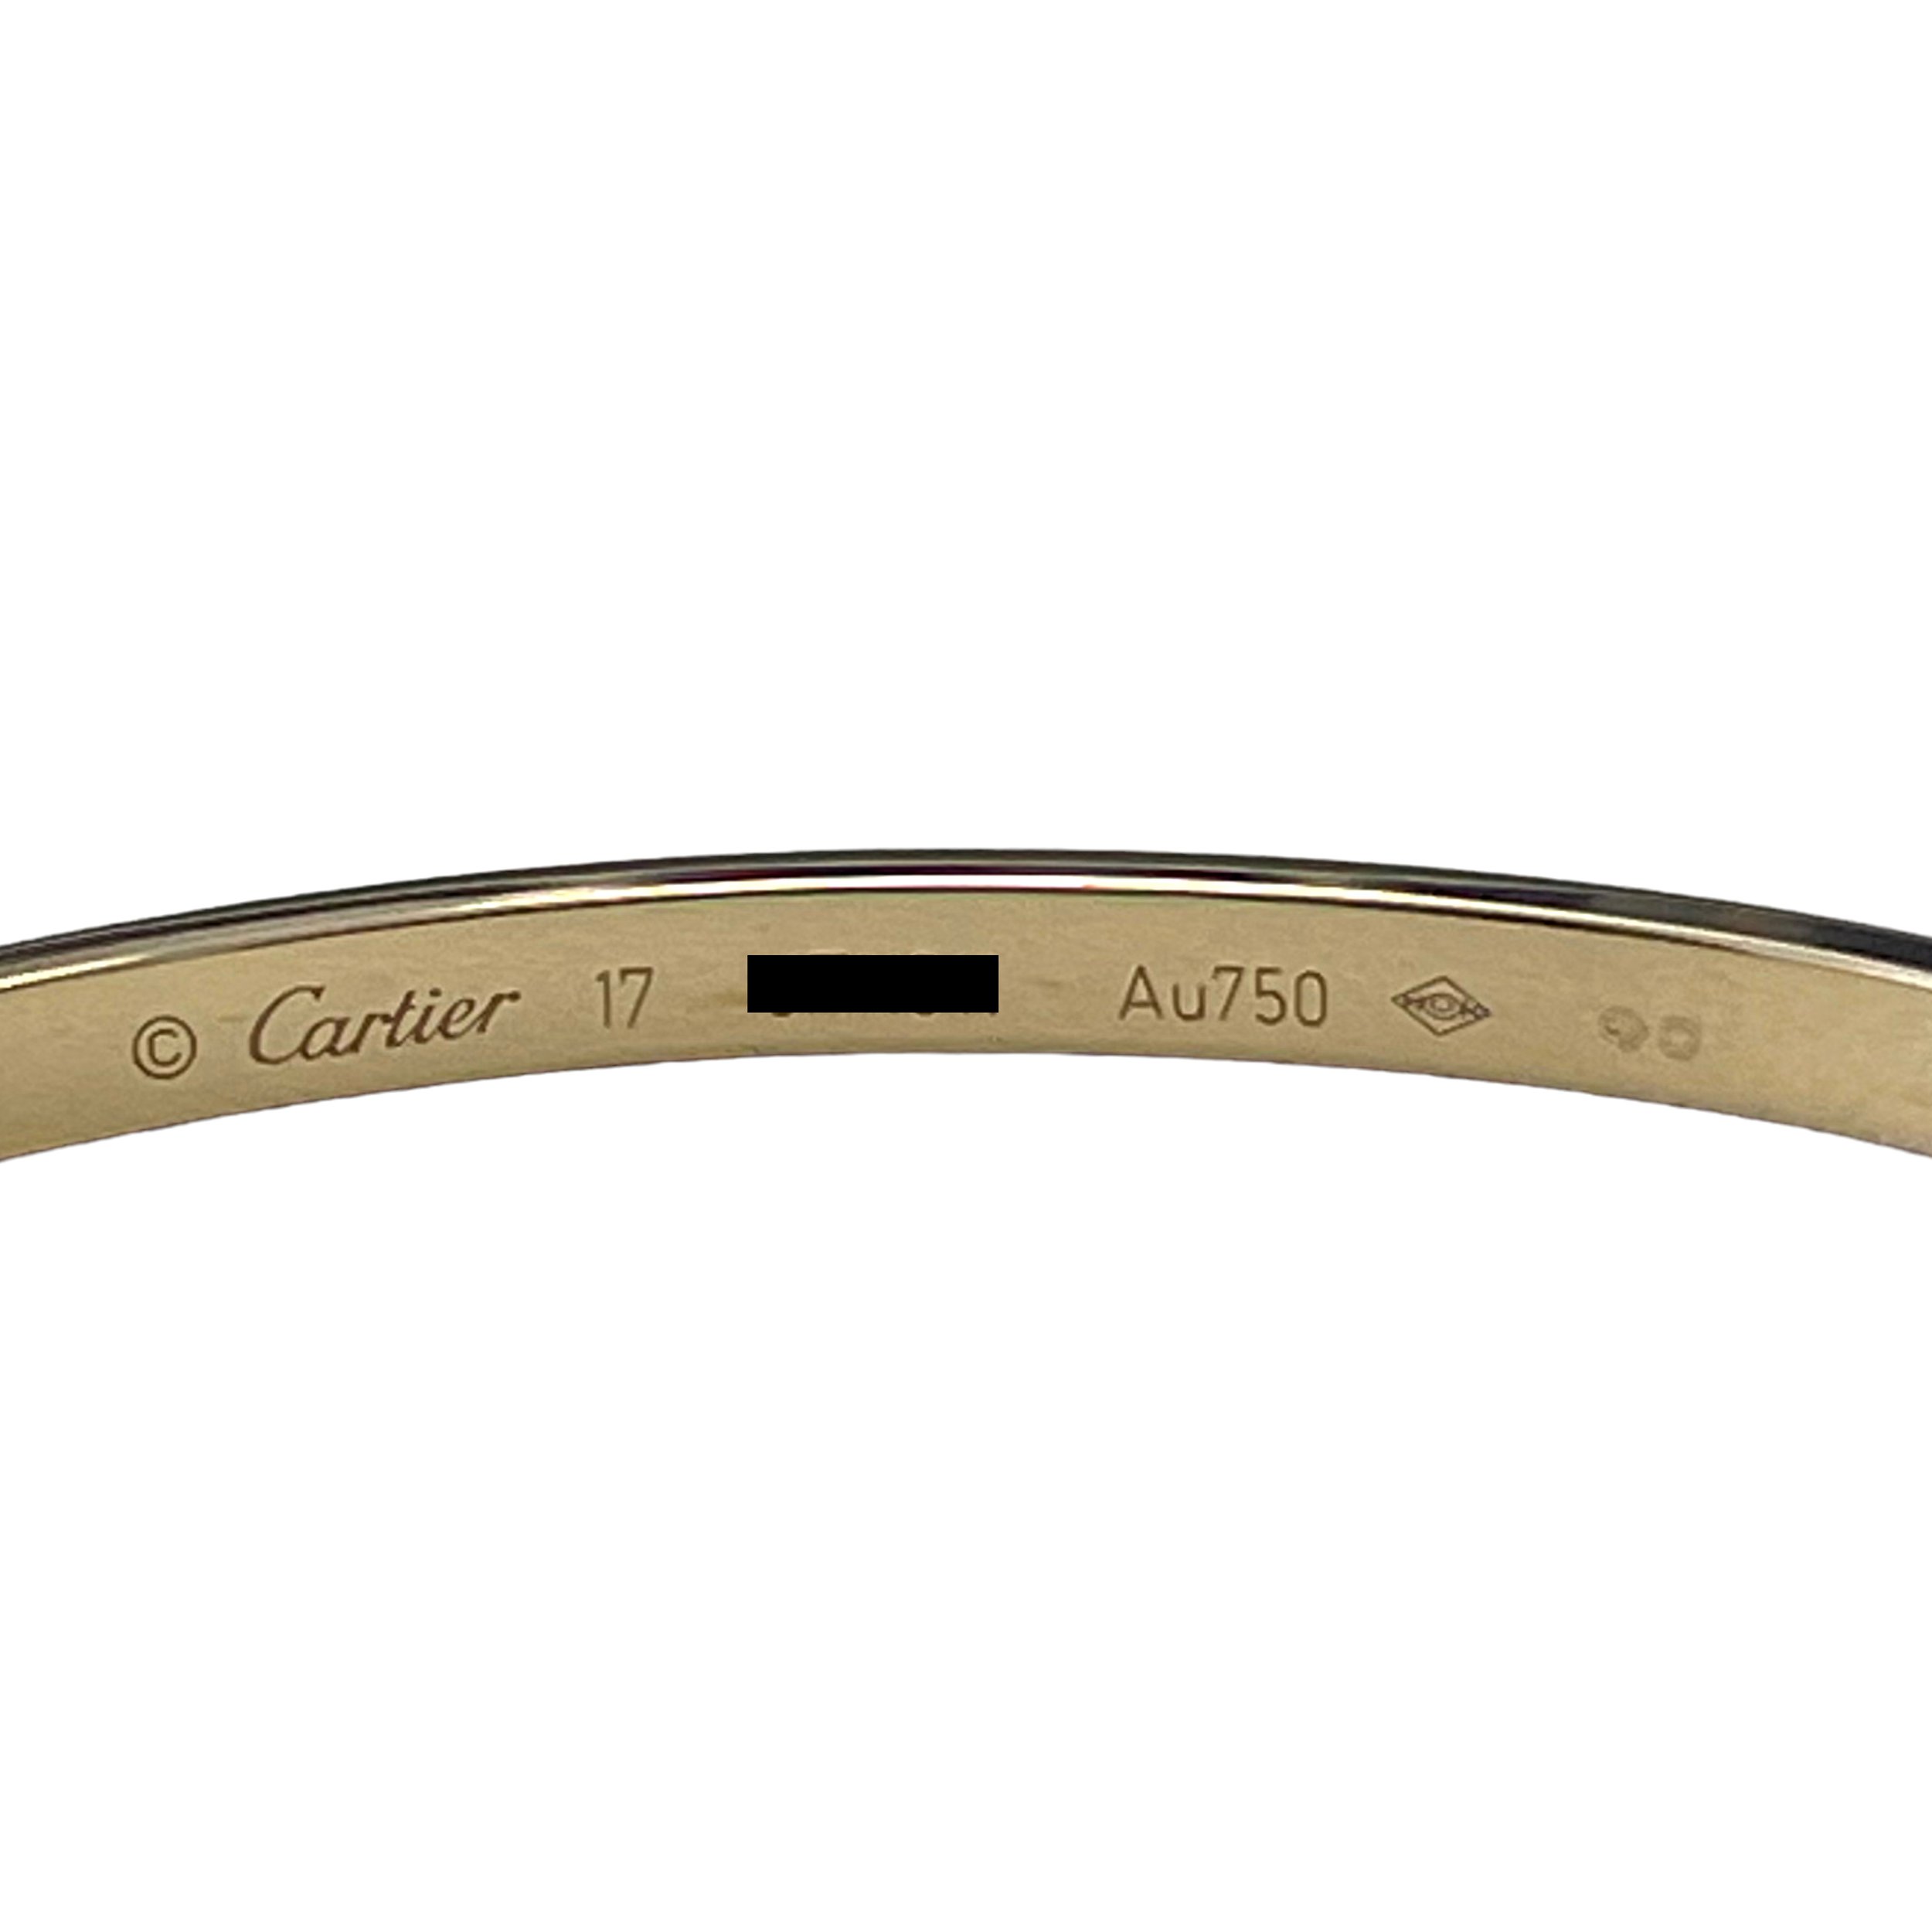 Buy Rose Gold-Toned Bracelets & Bangles for Women by Giva Online | Ajio.com